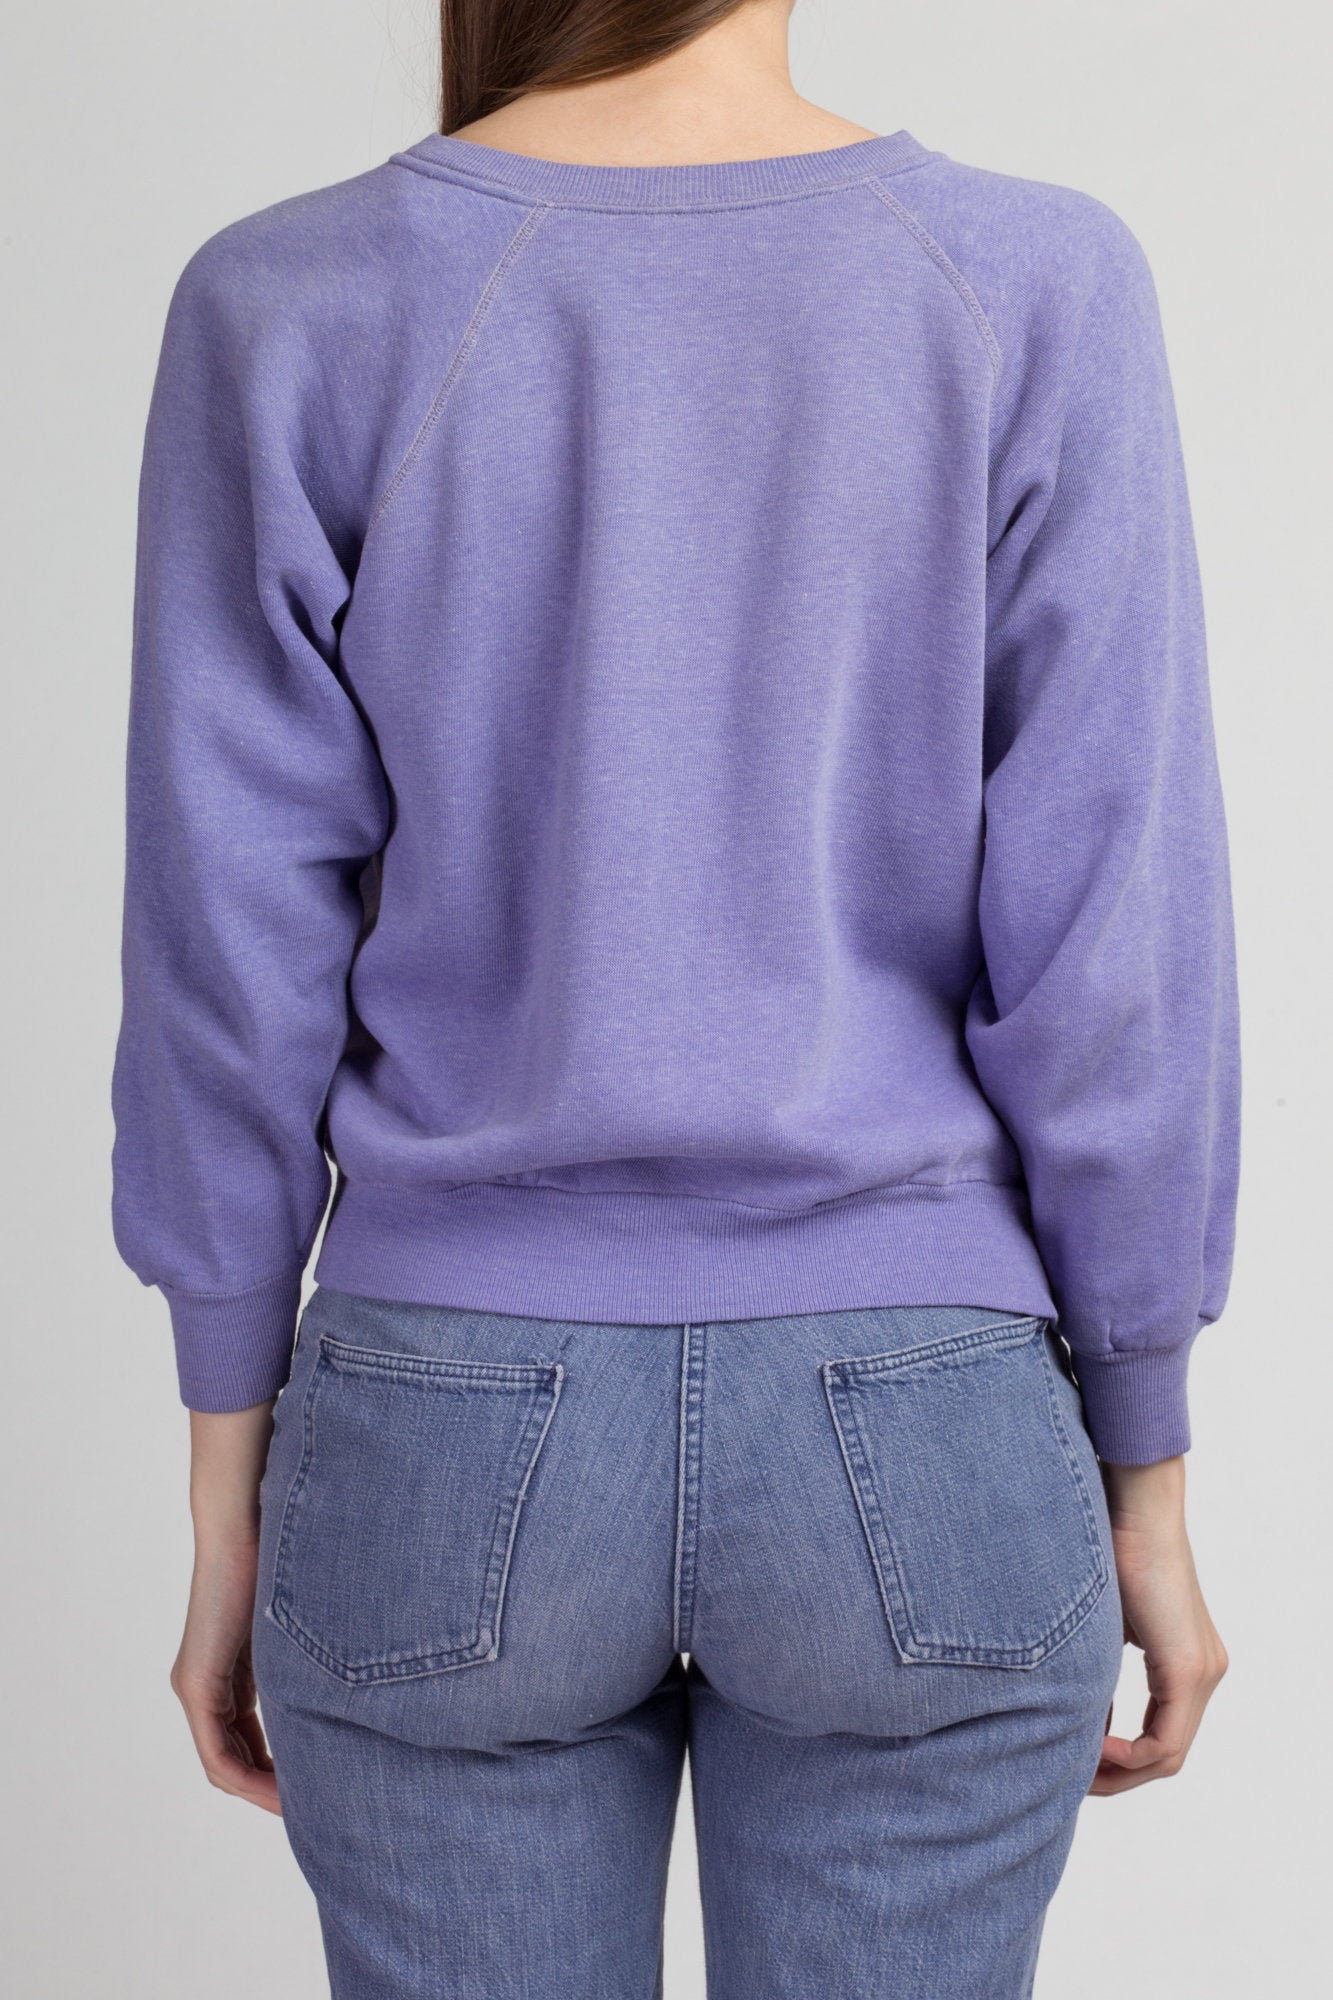 80s Bunny Cross Stitch Sweatshirt - Small | Vintage Purple Rabbit Graphic Crewneck Animal Pullover